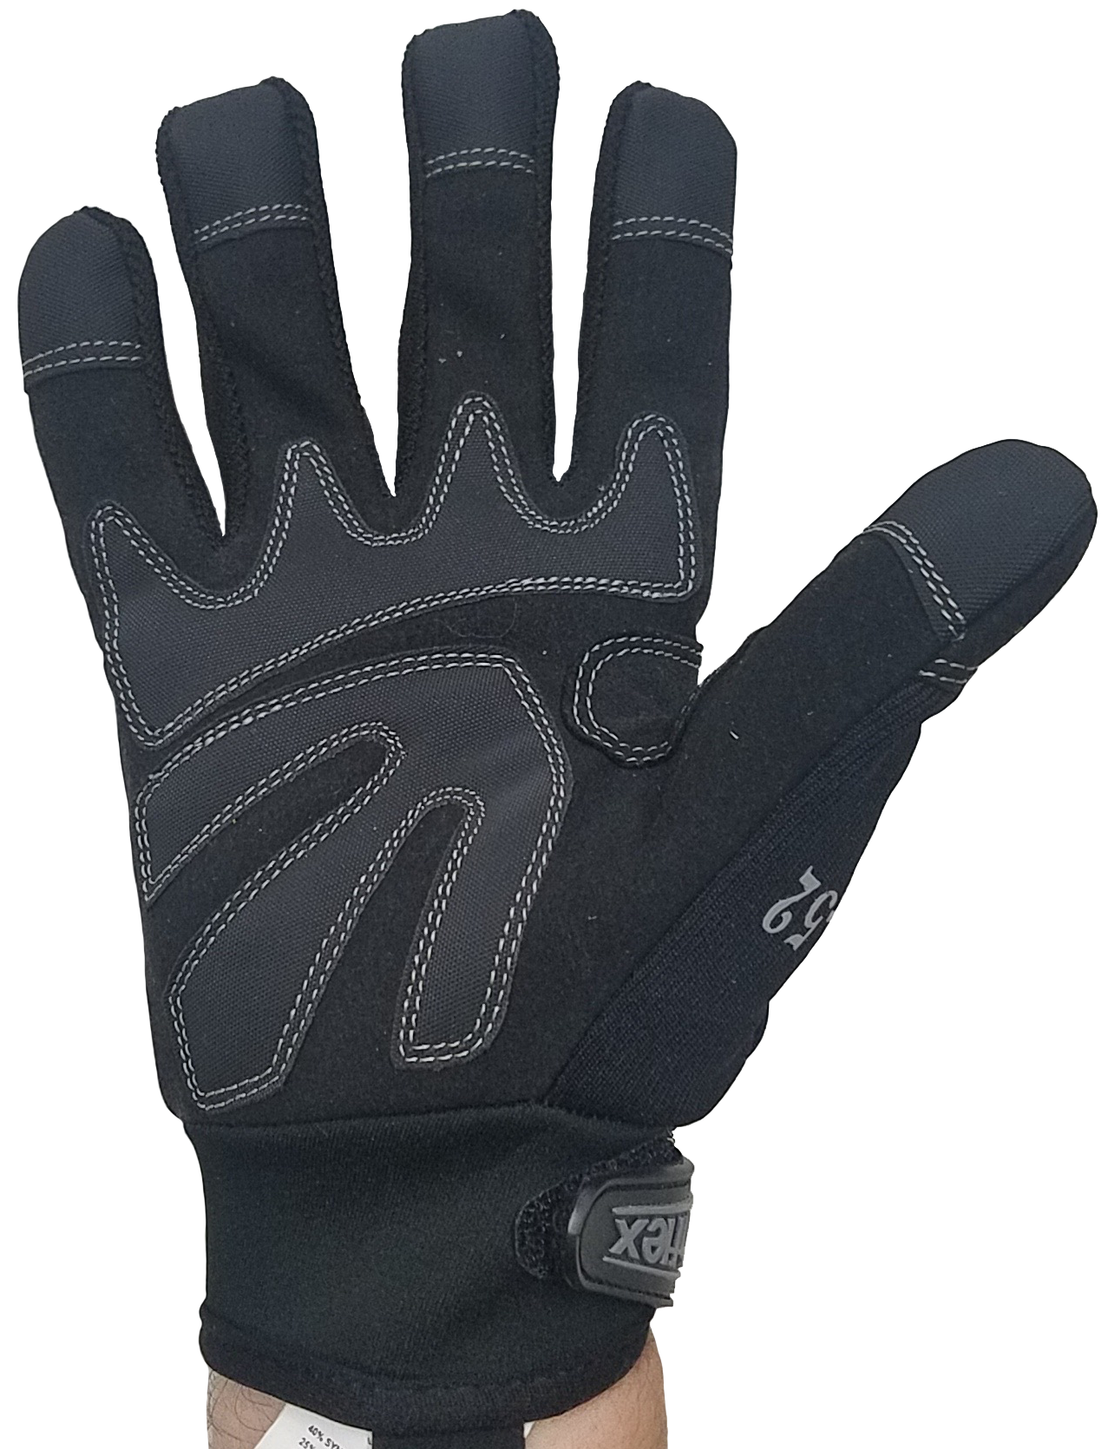 https://ia.legionsafety.com/bl1FOjG5oerTLPeTPwvGI8iv7r5JRsgihPPMYTXc/chicago-protective-apparel-mechflex-mx-52-mechanics-gloves-palm-1108x1449.png